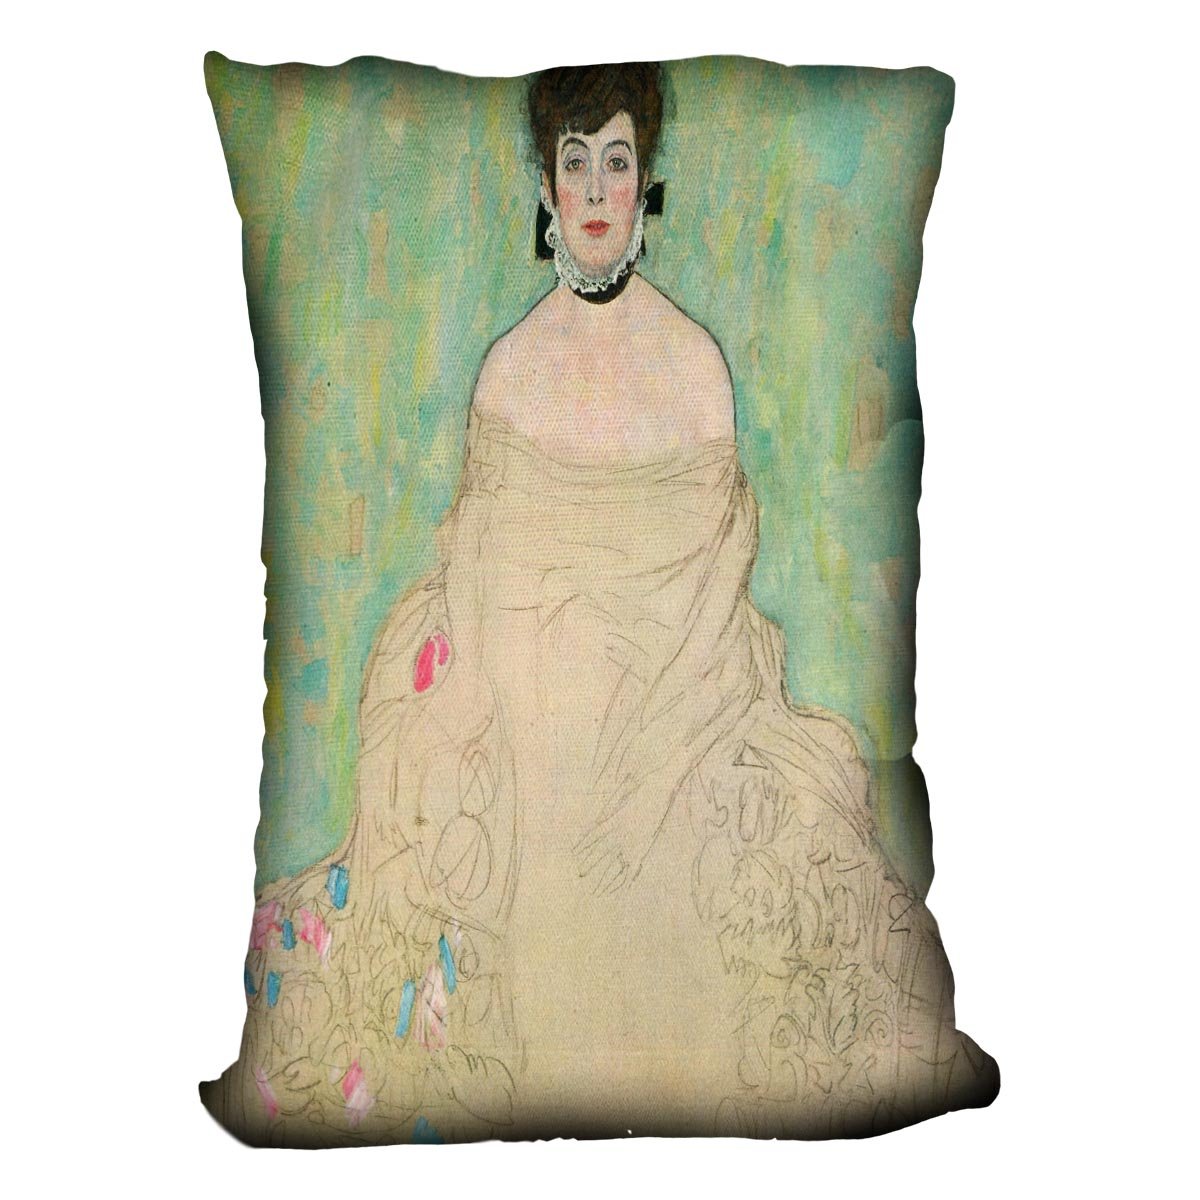 Portrait of Amalie Zuckerkandl by Klimt Throw Pillow